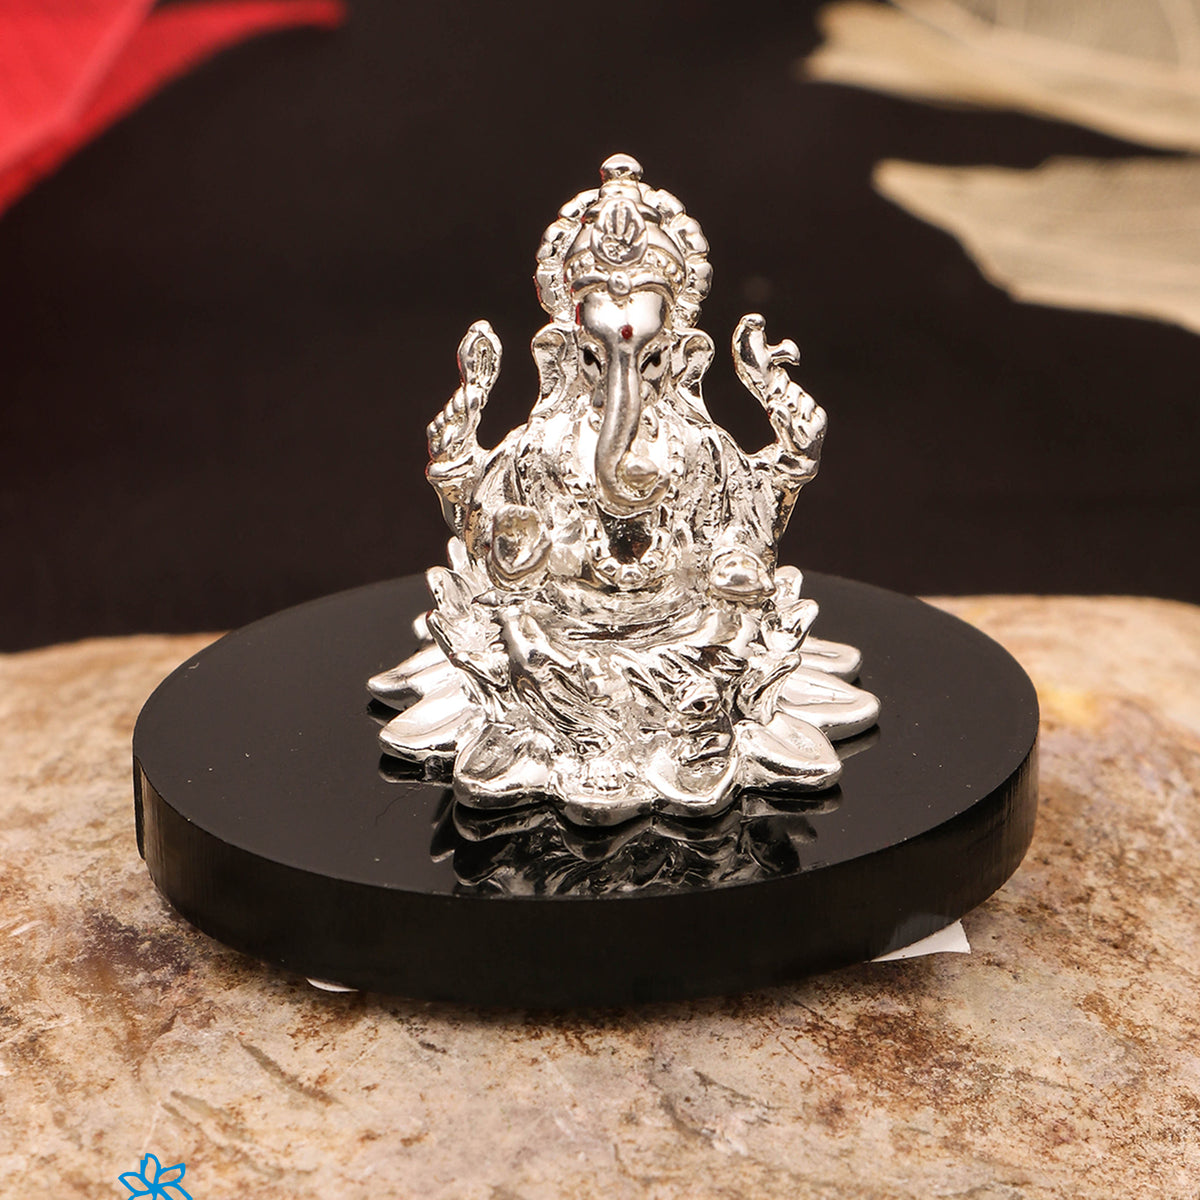 Buy Silver Ganesha Idol Online in India - Mypoojabox.in